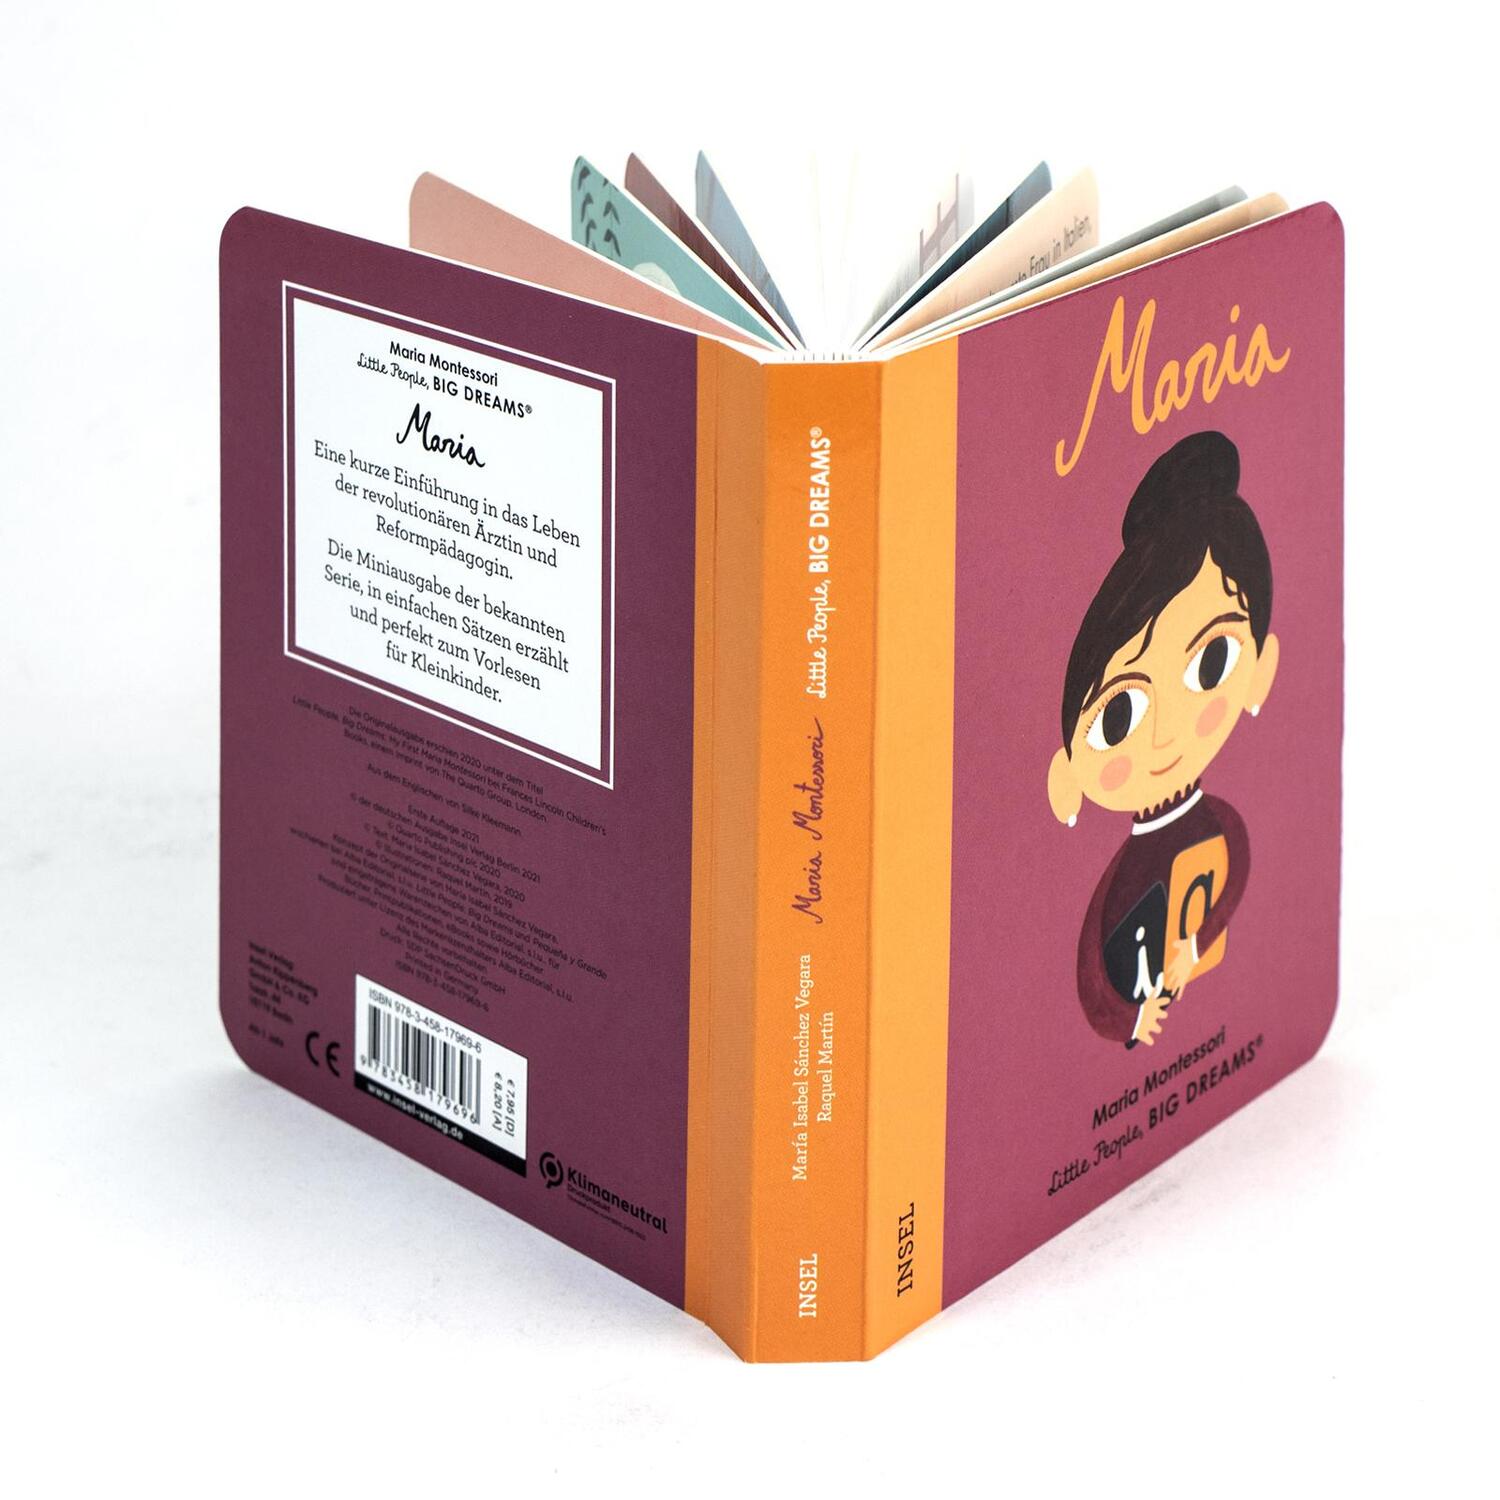 Bild: 9783458179696 | Maria Montessori | Little People, Big Dreams. Mini | Vegara | Buch